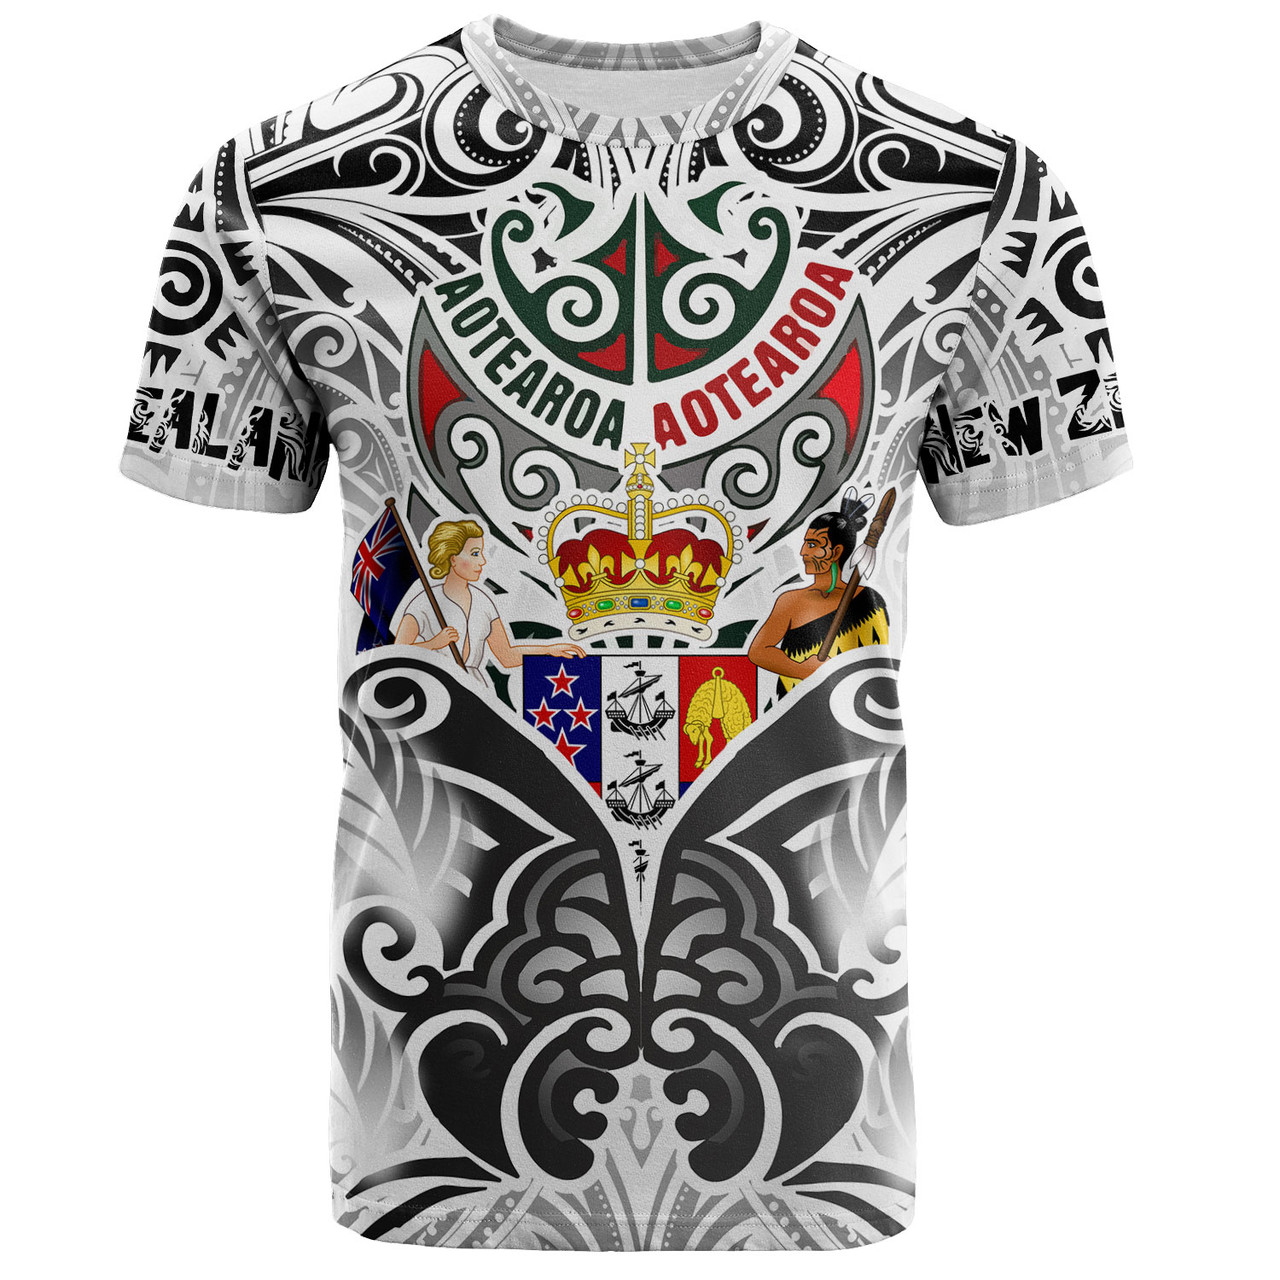 New Zealand Aotearoa T-Shirt Maori Traditional Hongi - The Breath Of Life Coat Of Arms Tribal Patterns